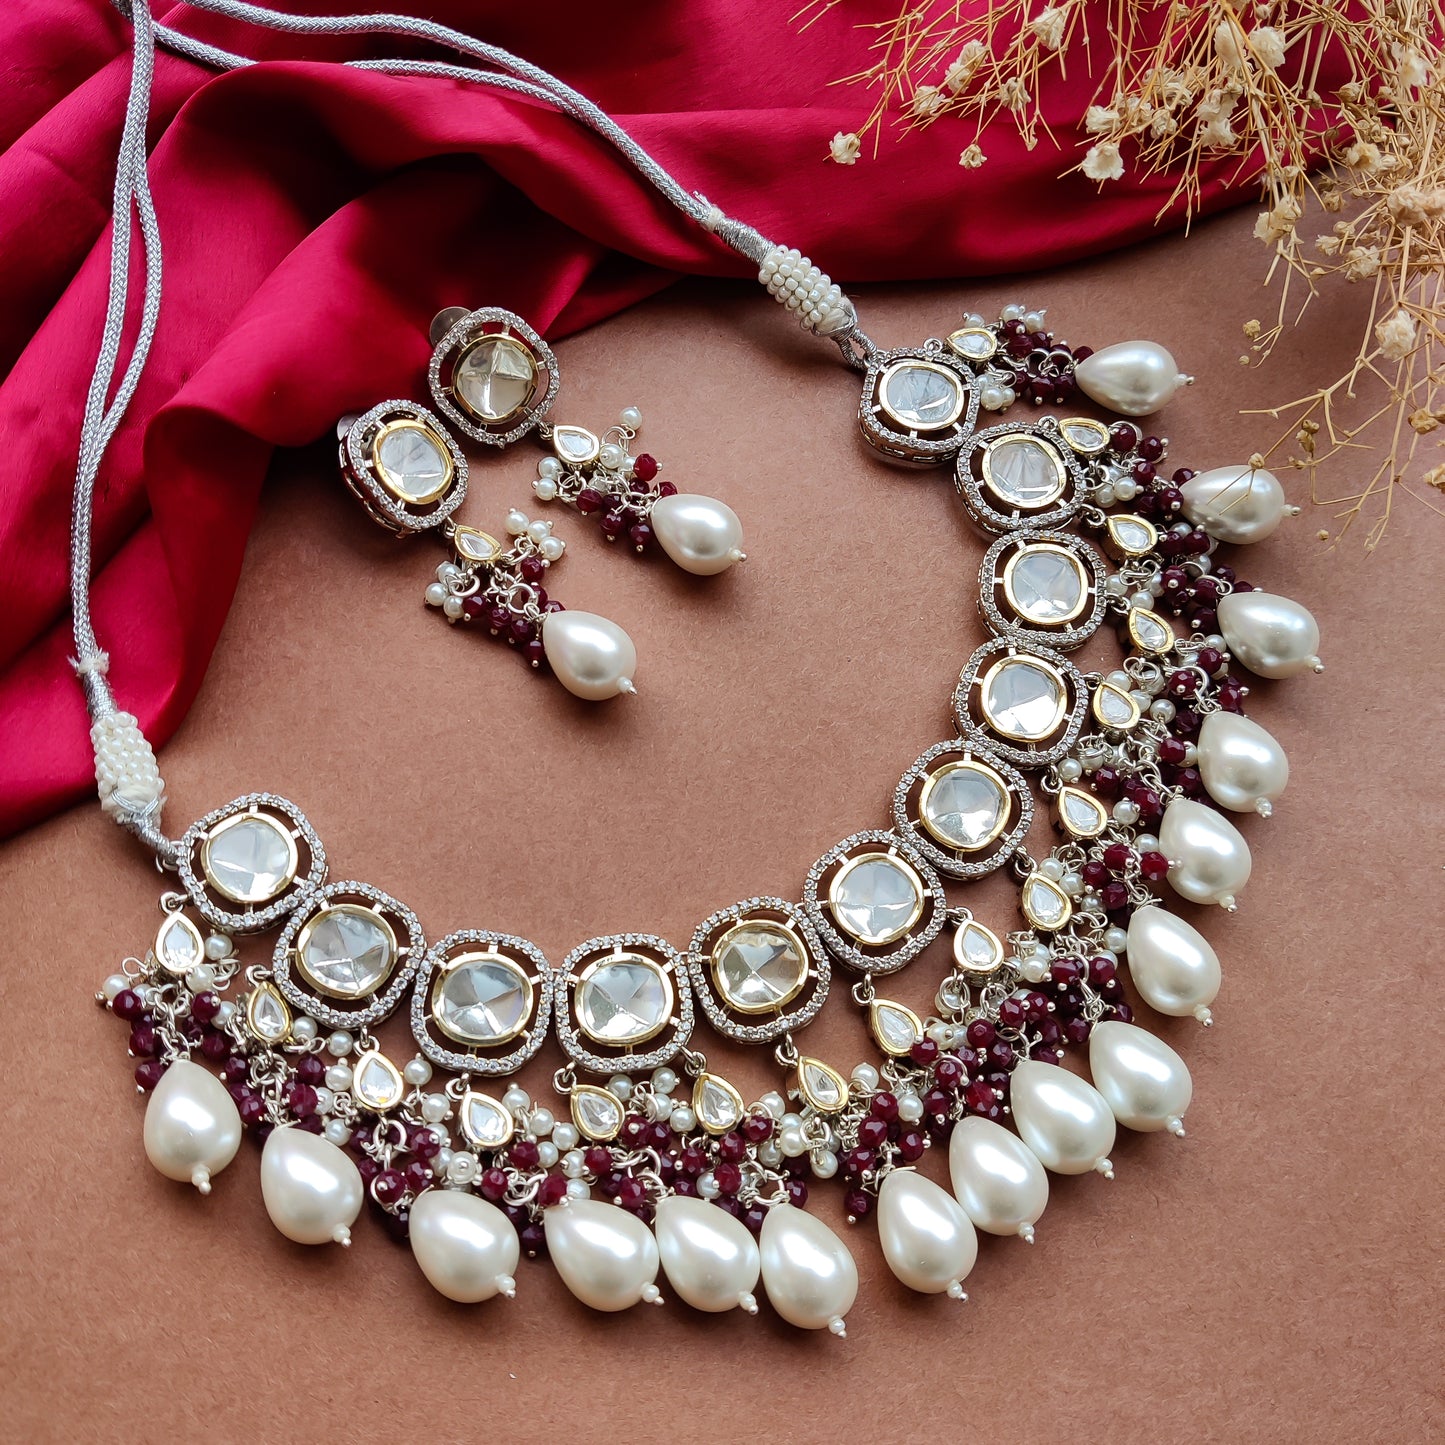 Mehtab Uncut Polki AD Crystal Necklace Set with Earrings - Maroon